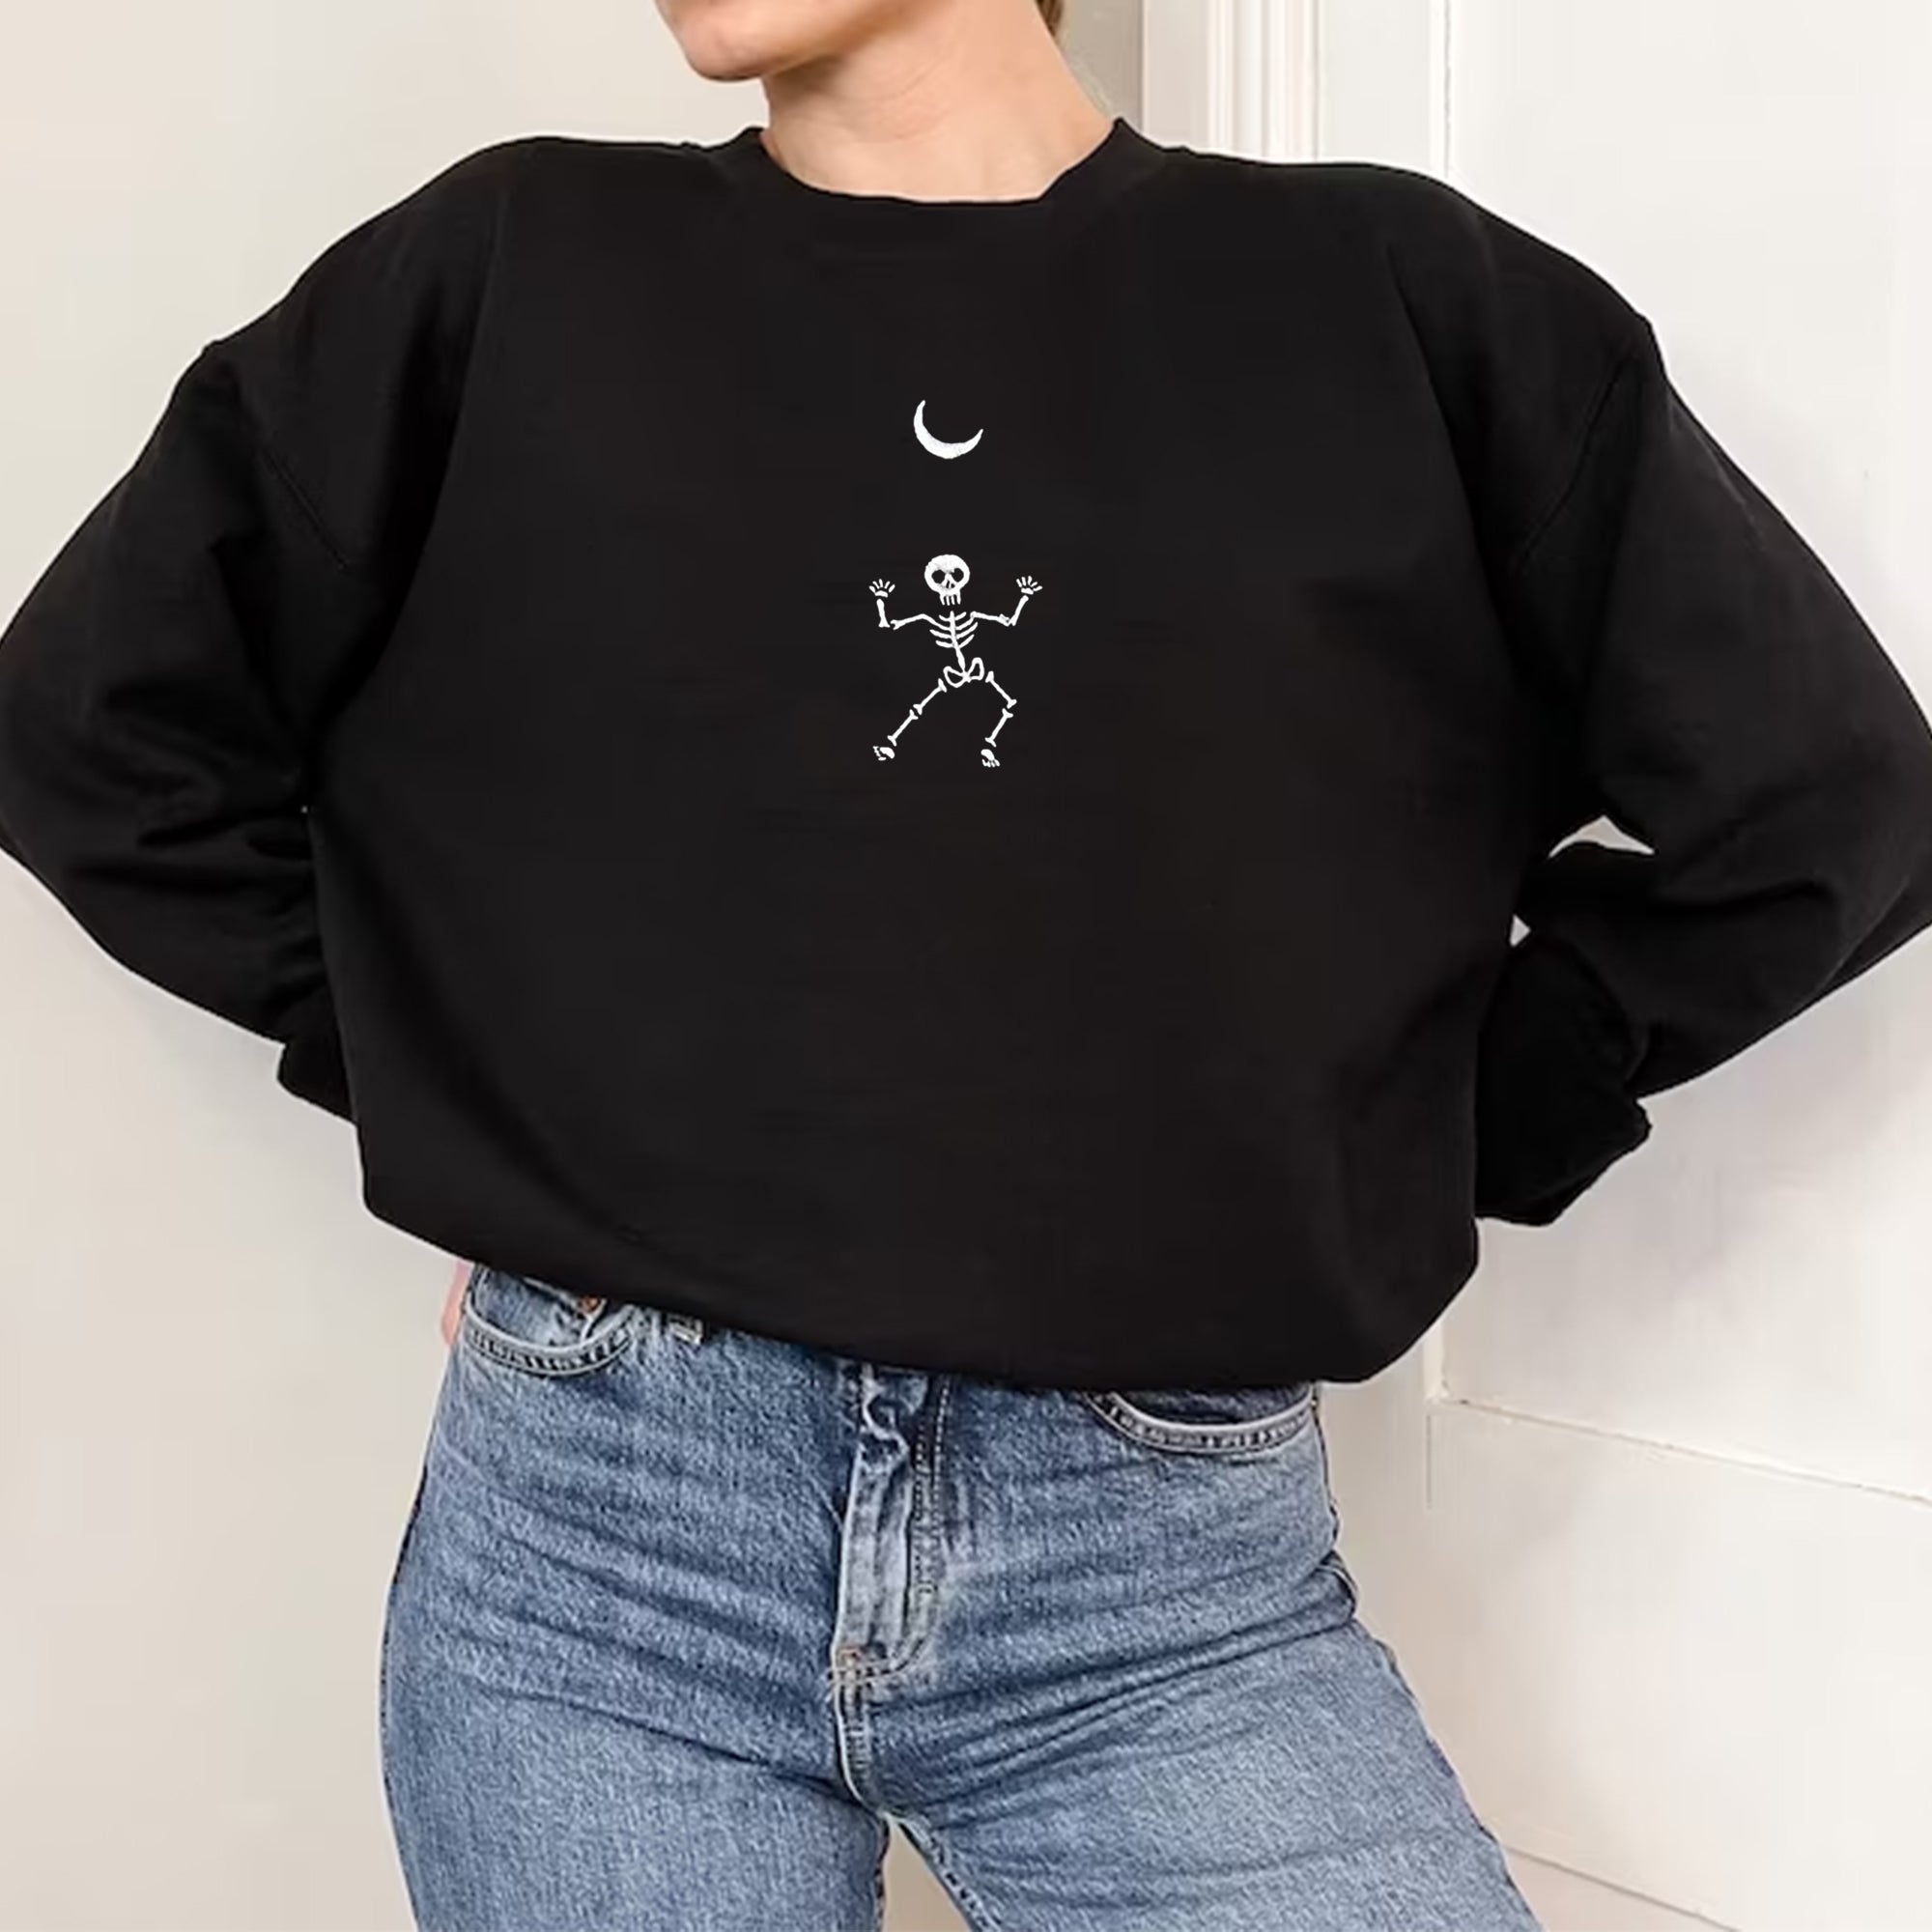 embroidered skeleton sweatshirt